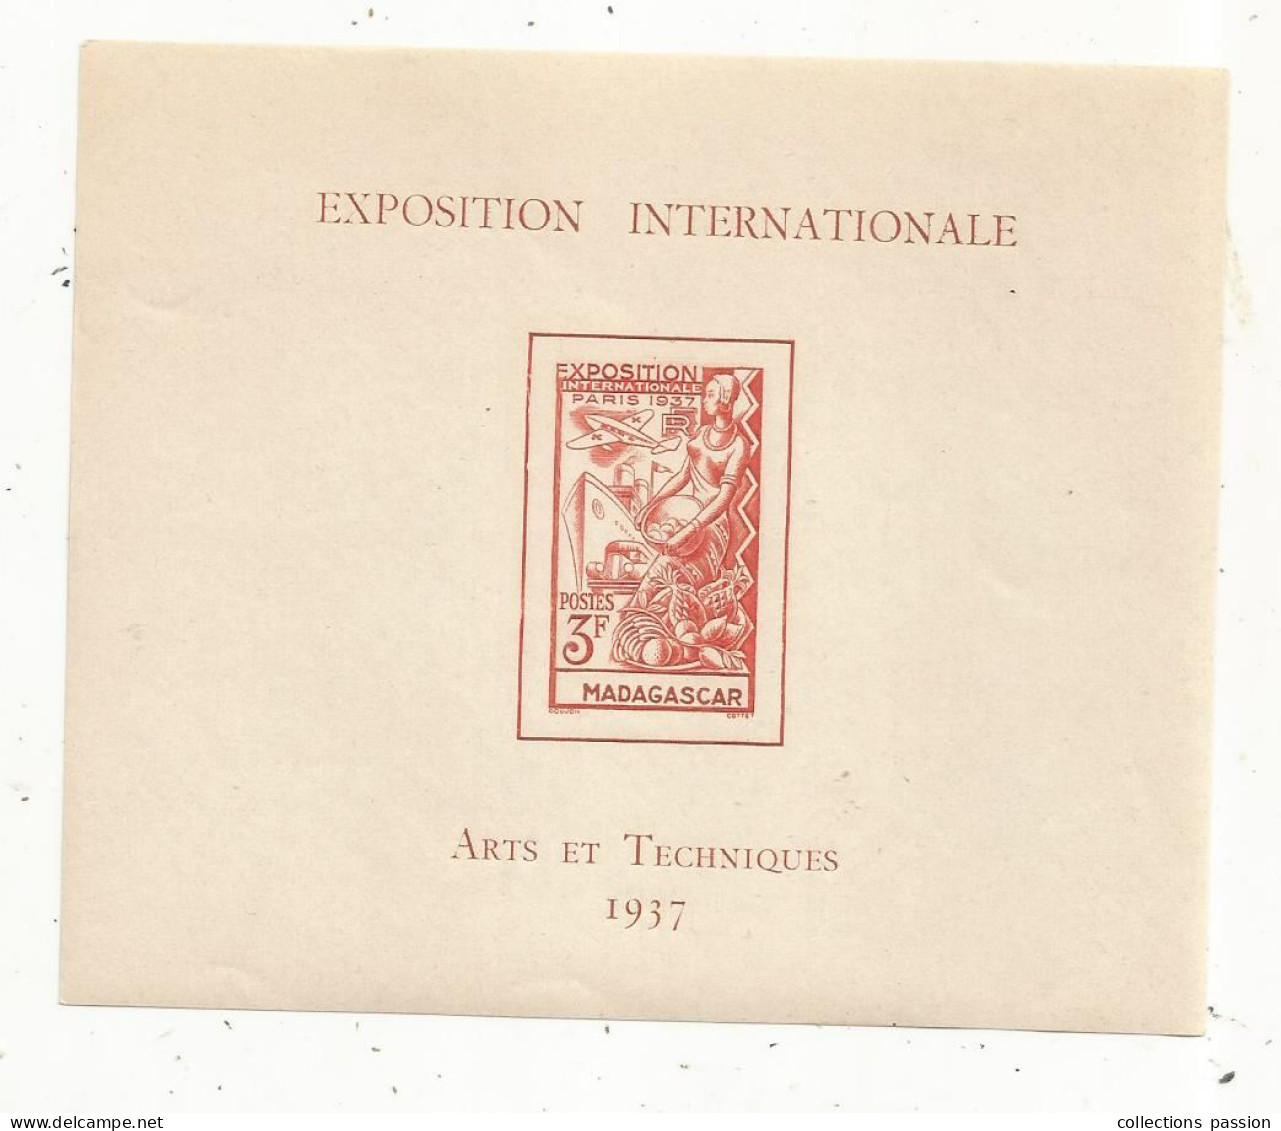 Exposition Internationale , ARTS ET TECHNIQUES 1937 , MADAGASCAR ,3 F - Briefe U. Dokumente